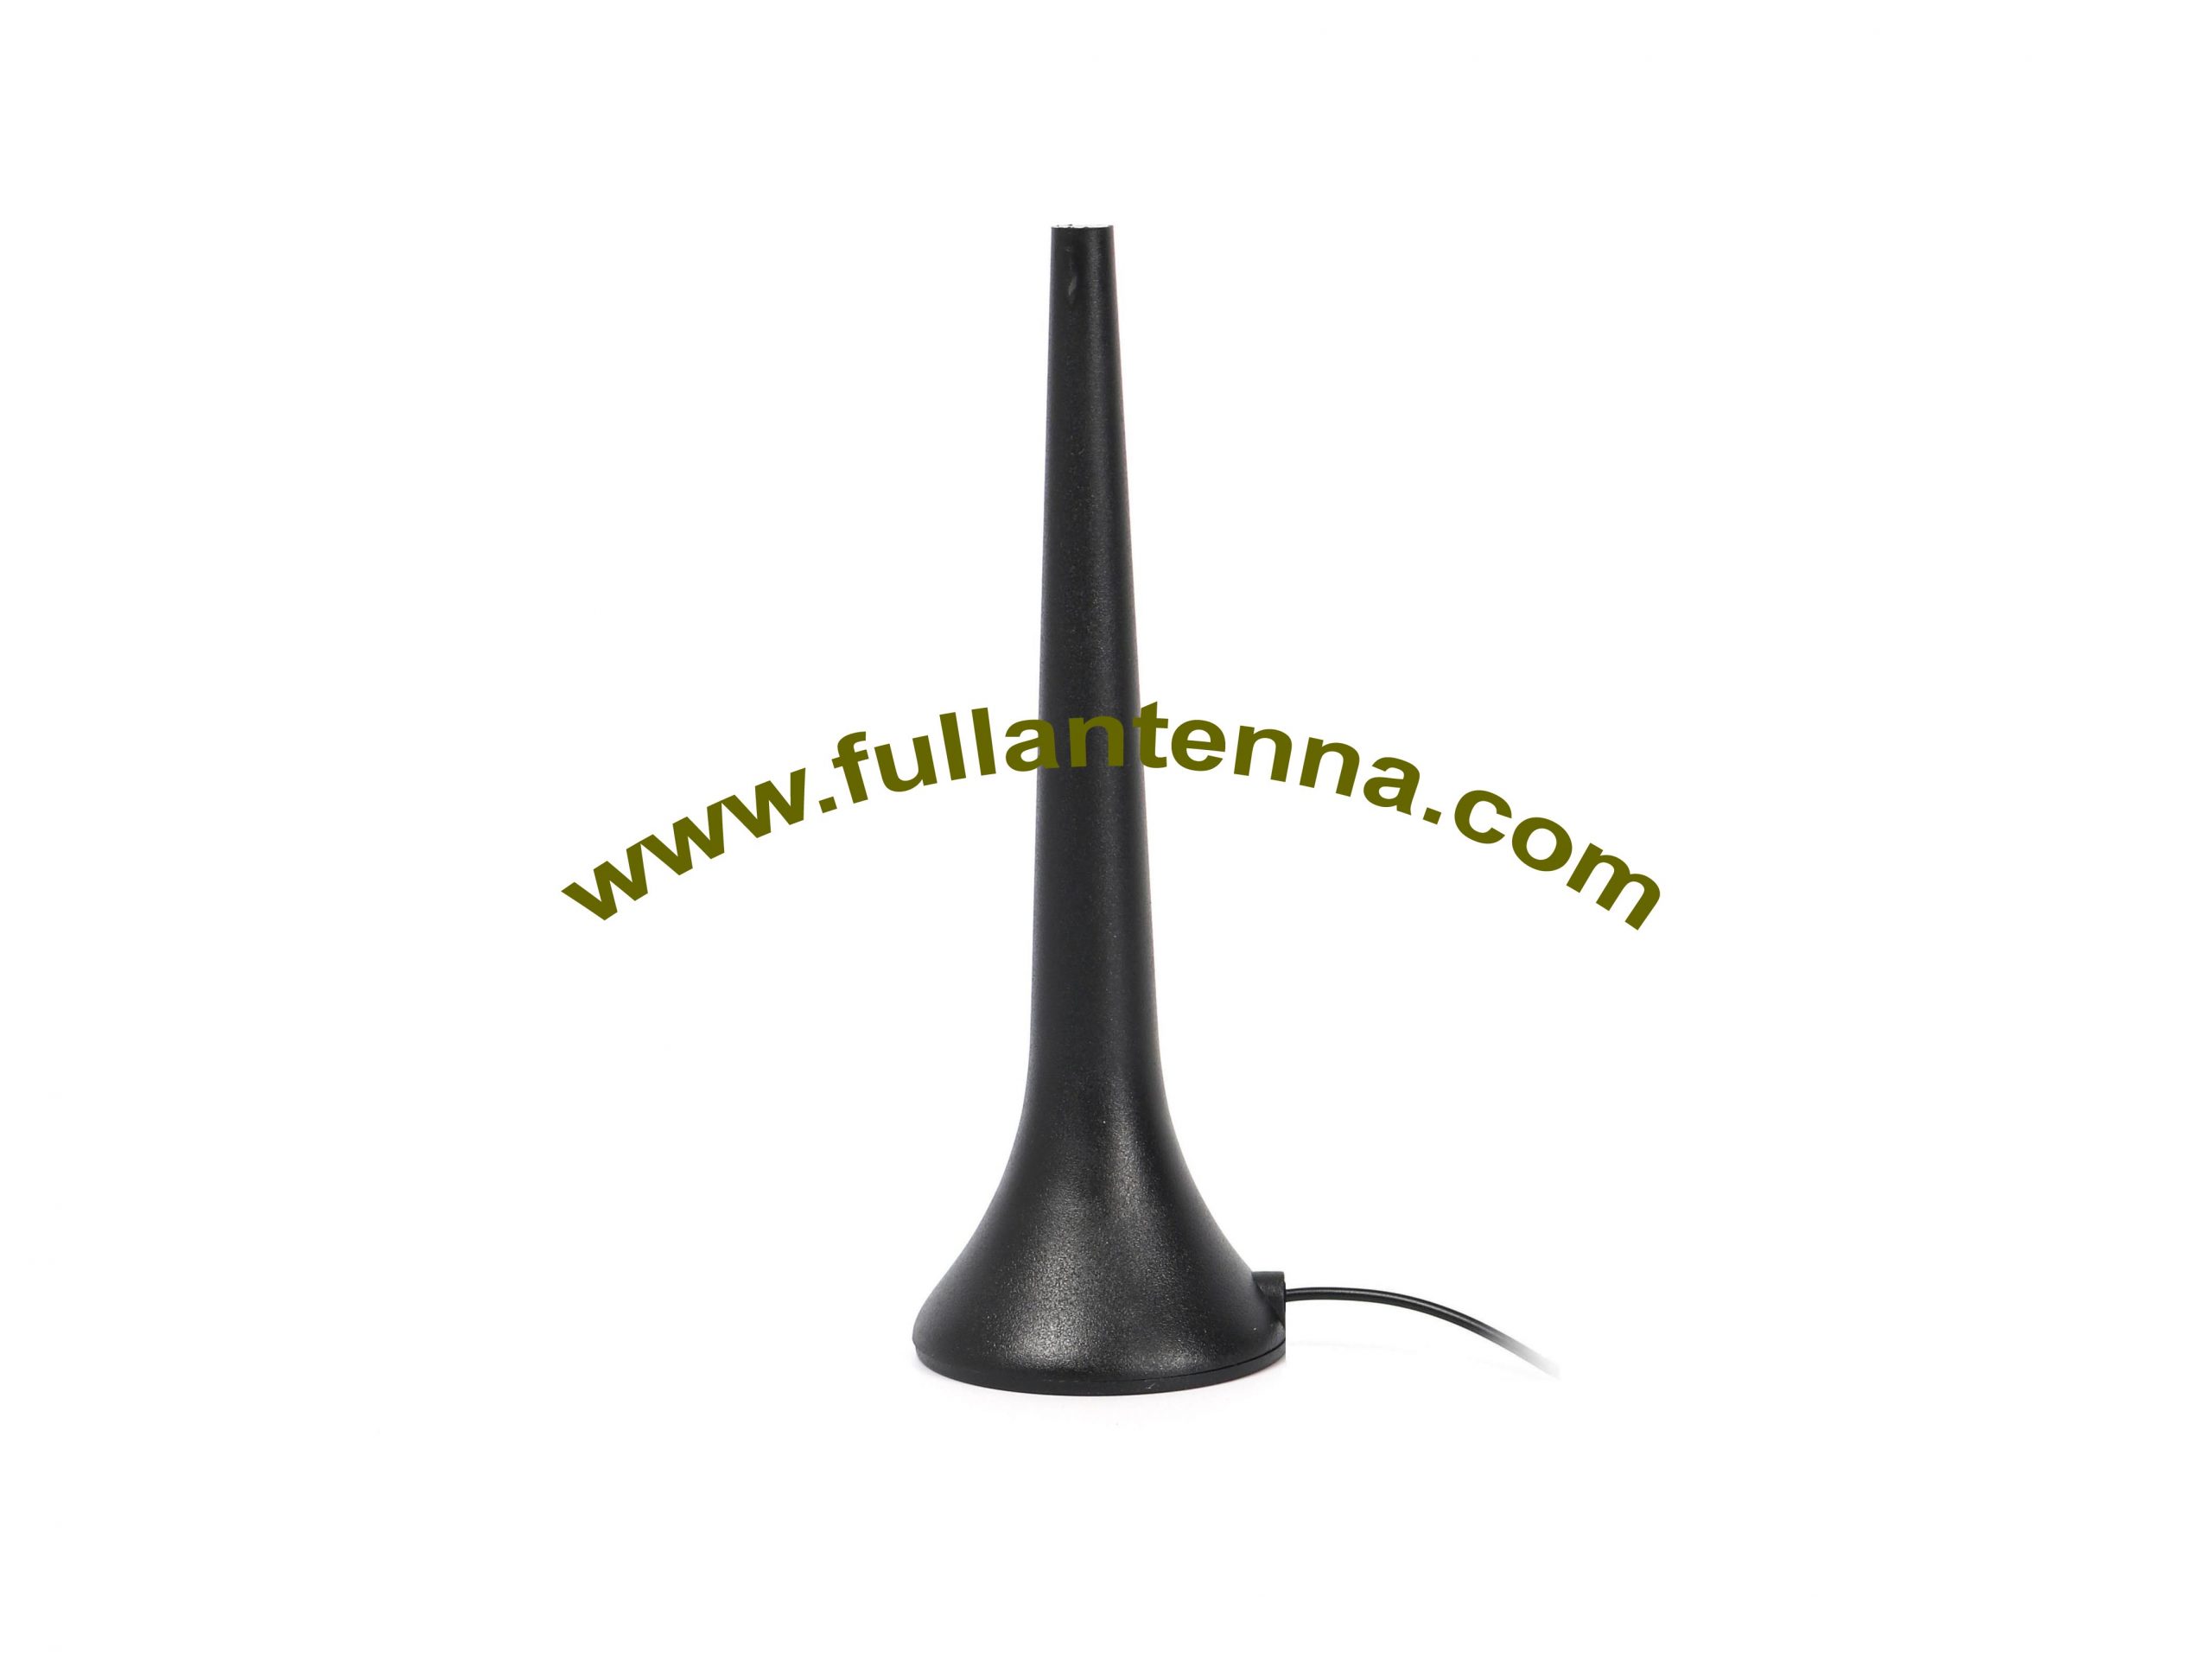 P/N:FA3G.15,3G External Antenna,outdoor antenna magnetic mount